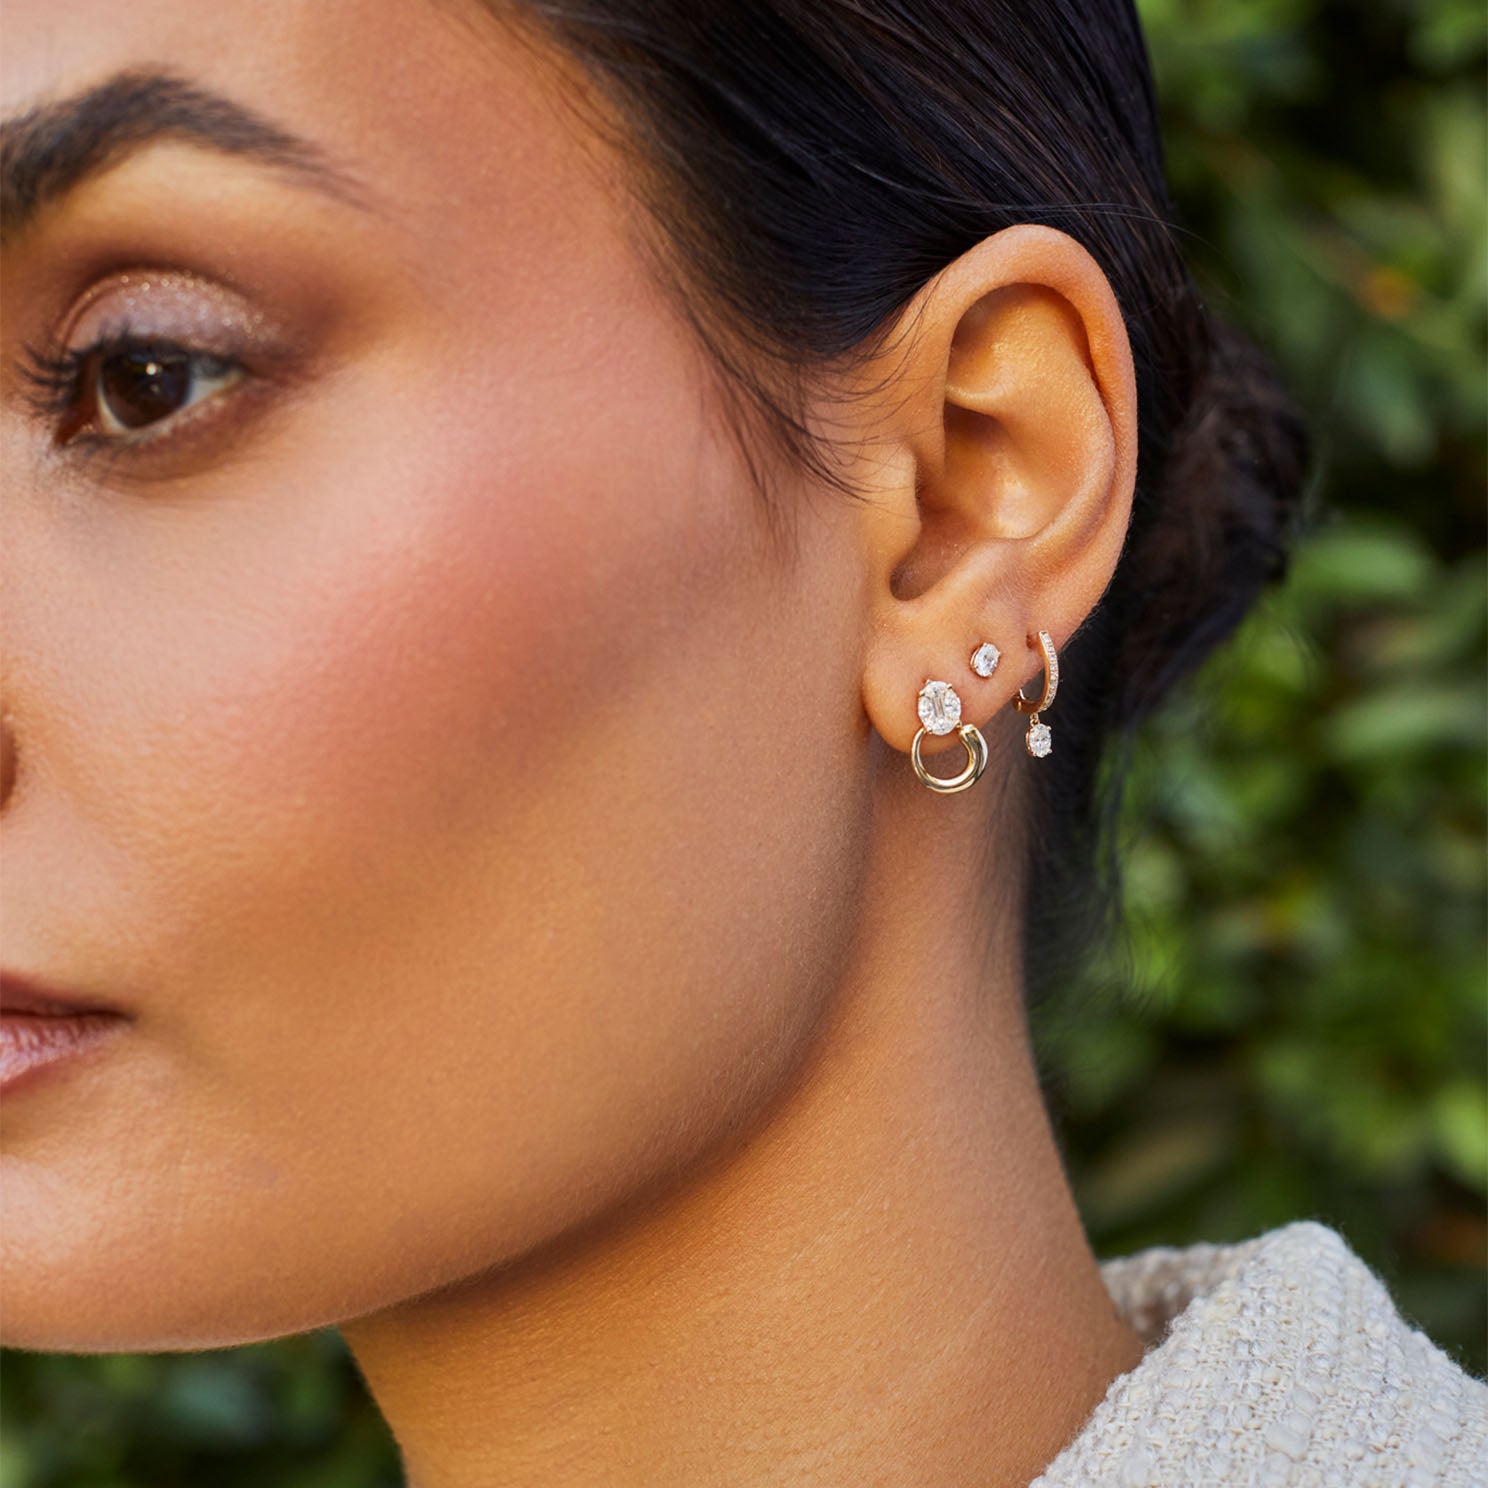 Diamond Oval Stud Earring styled on second earring hole with diamond and gold earrings styled on ear